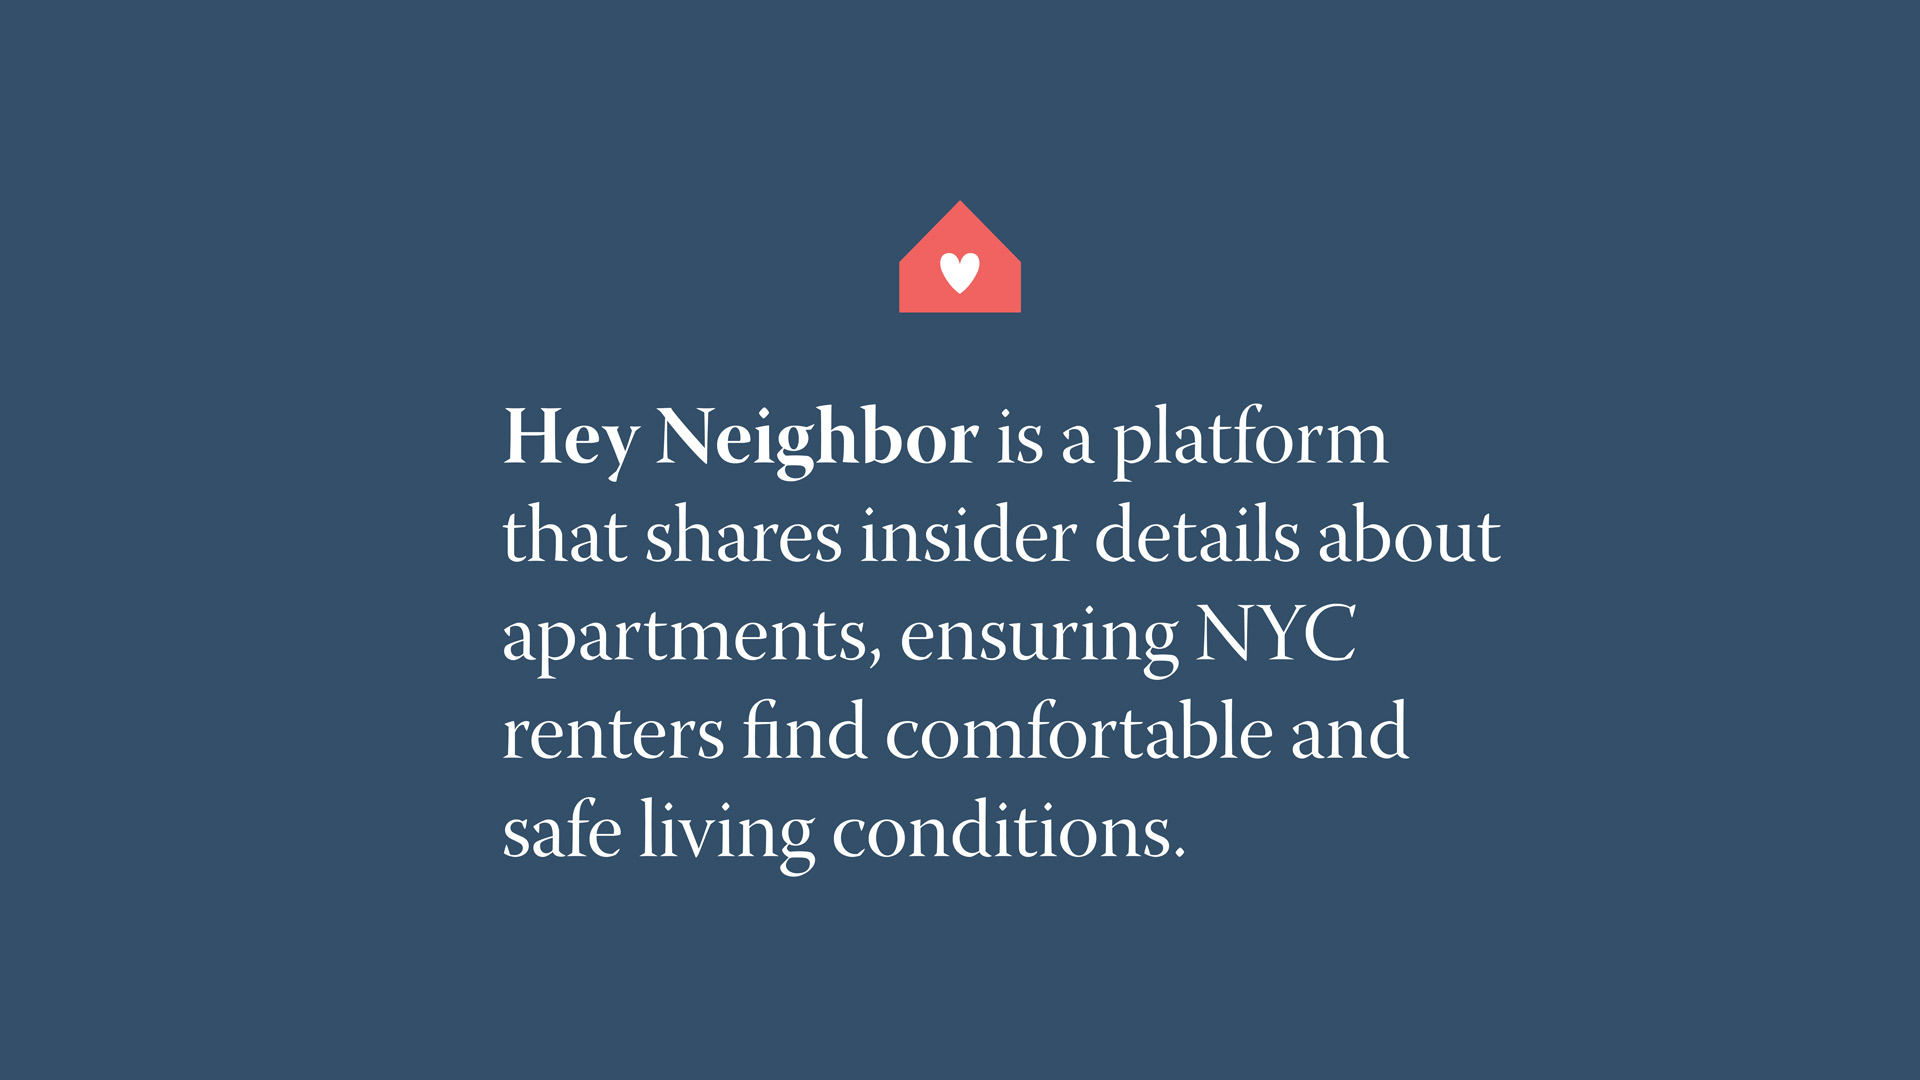 Hey Neighbor description by Jeremy Garcia